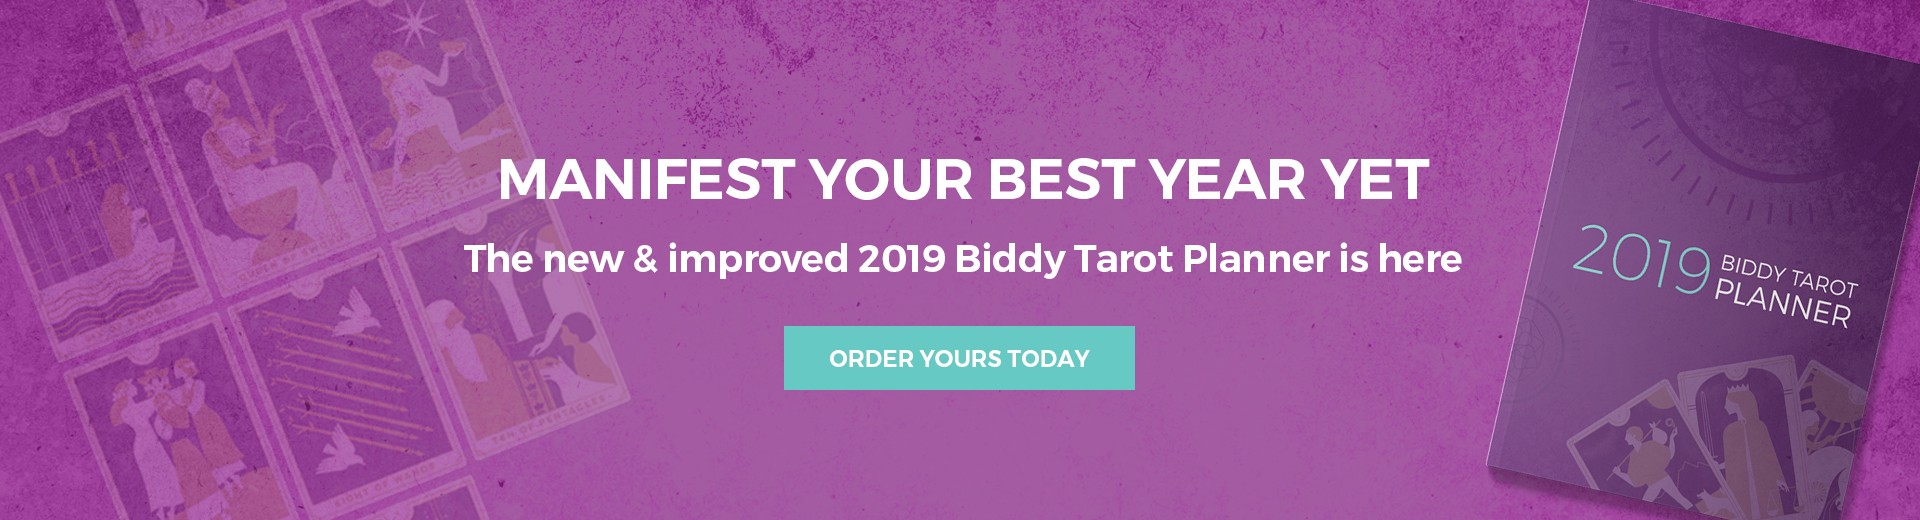 2019 Biddy Tarot Planner